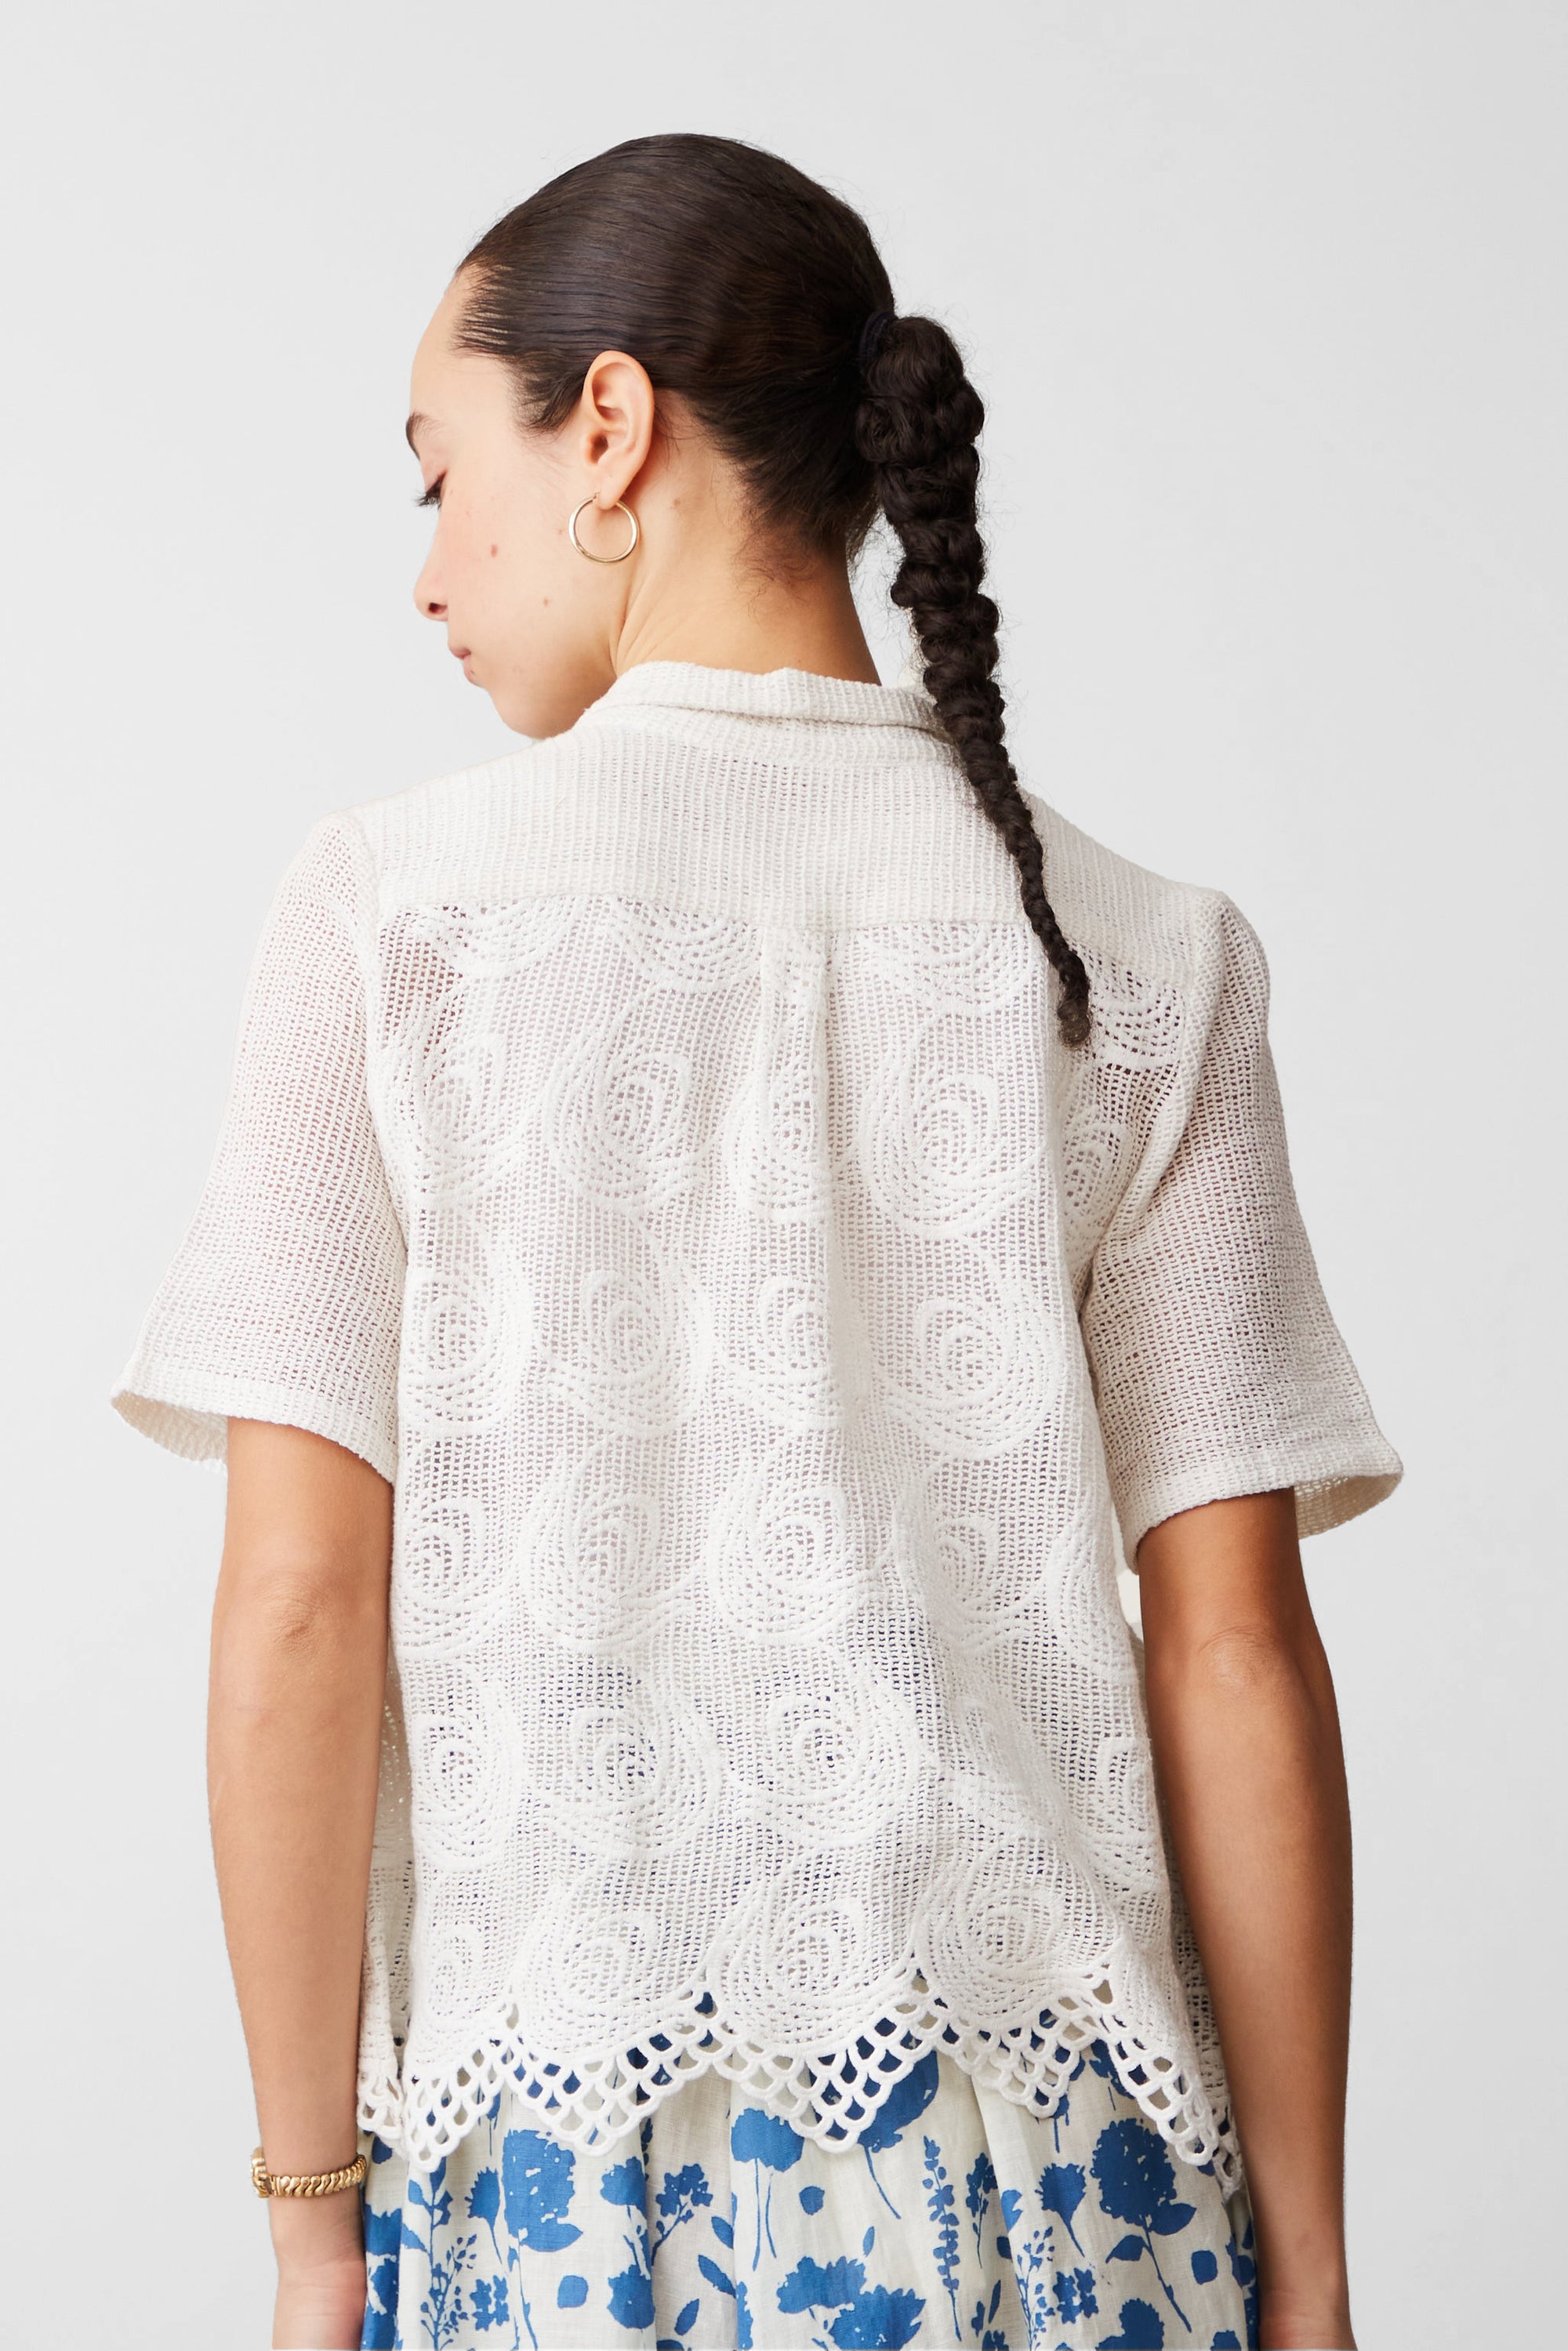 Jojo Shirt in Swirl Cotton Crochet by Caron Callahan